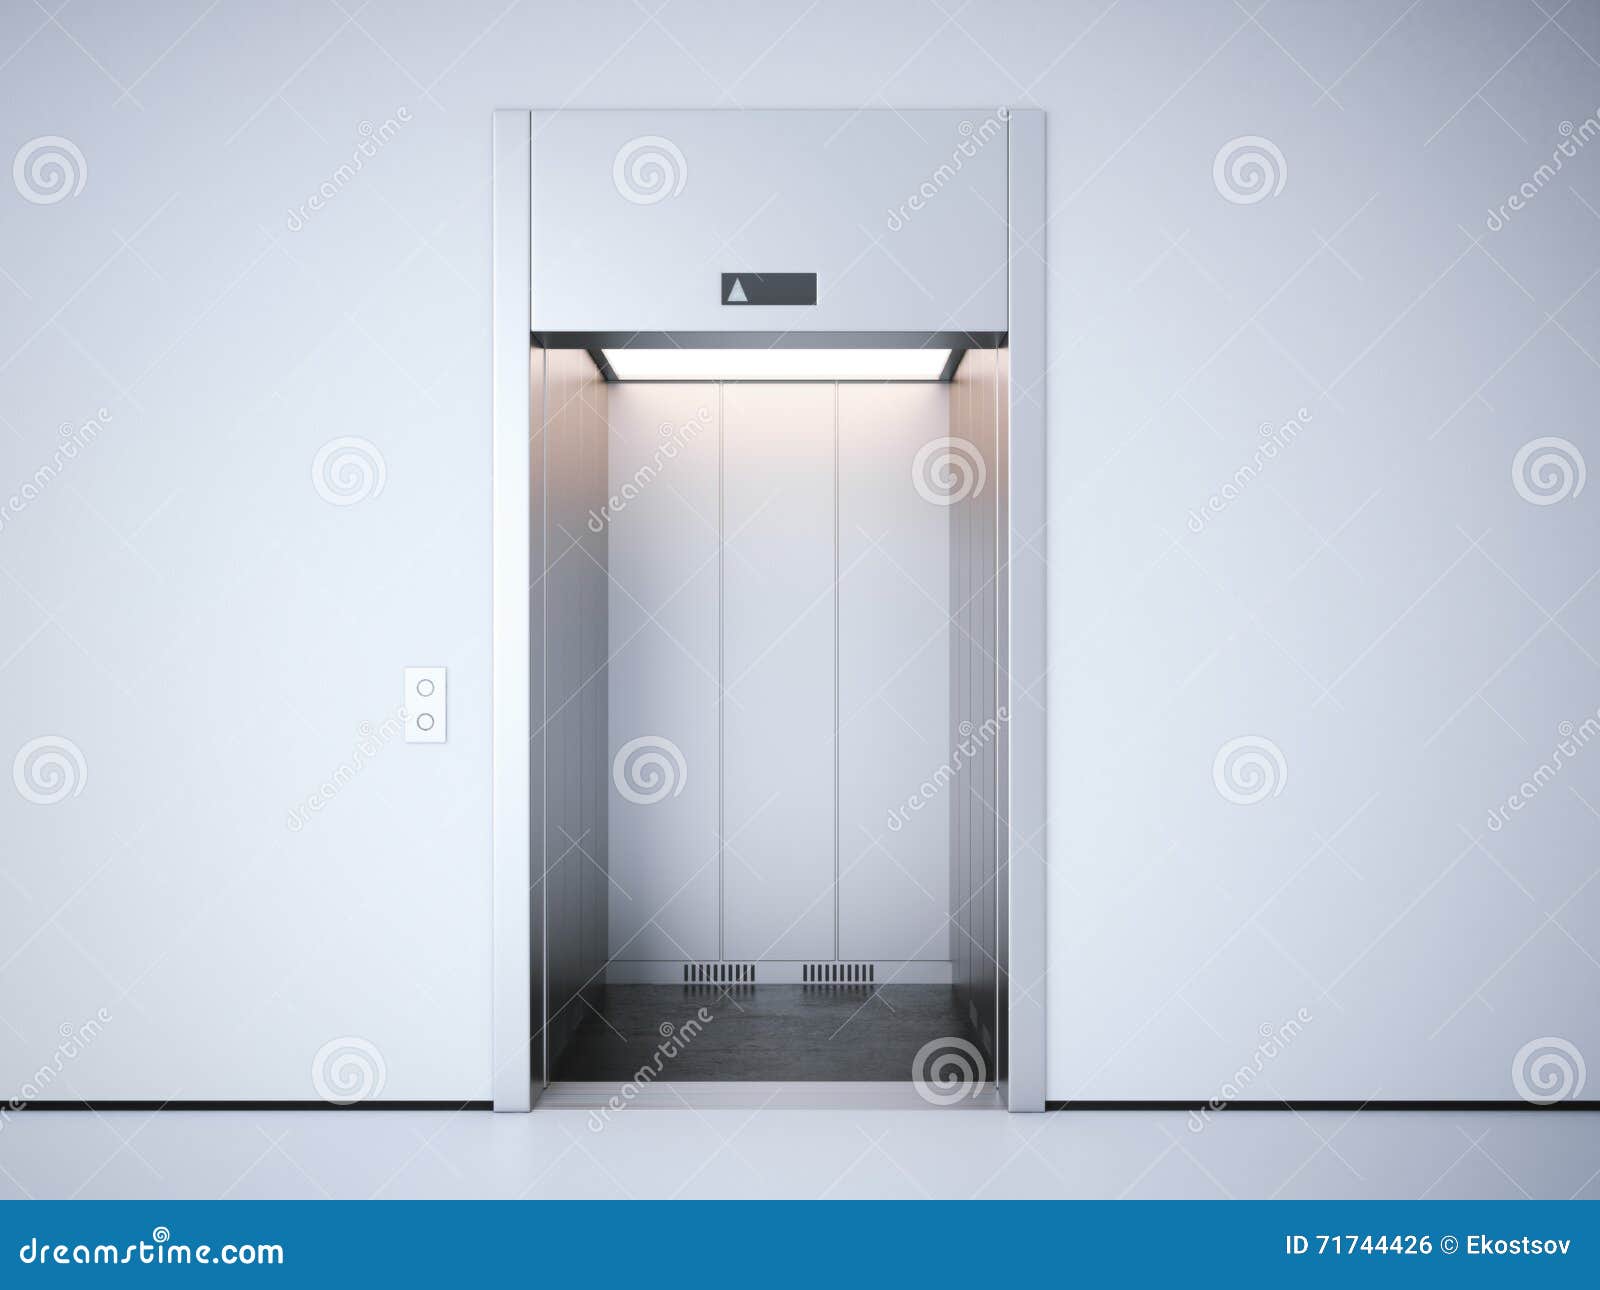 Elevator перевод. Лифт рендер. Лифт с 3 дверями. 3d рендер лифта Shindler. Elevator inside open Door.